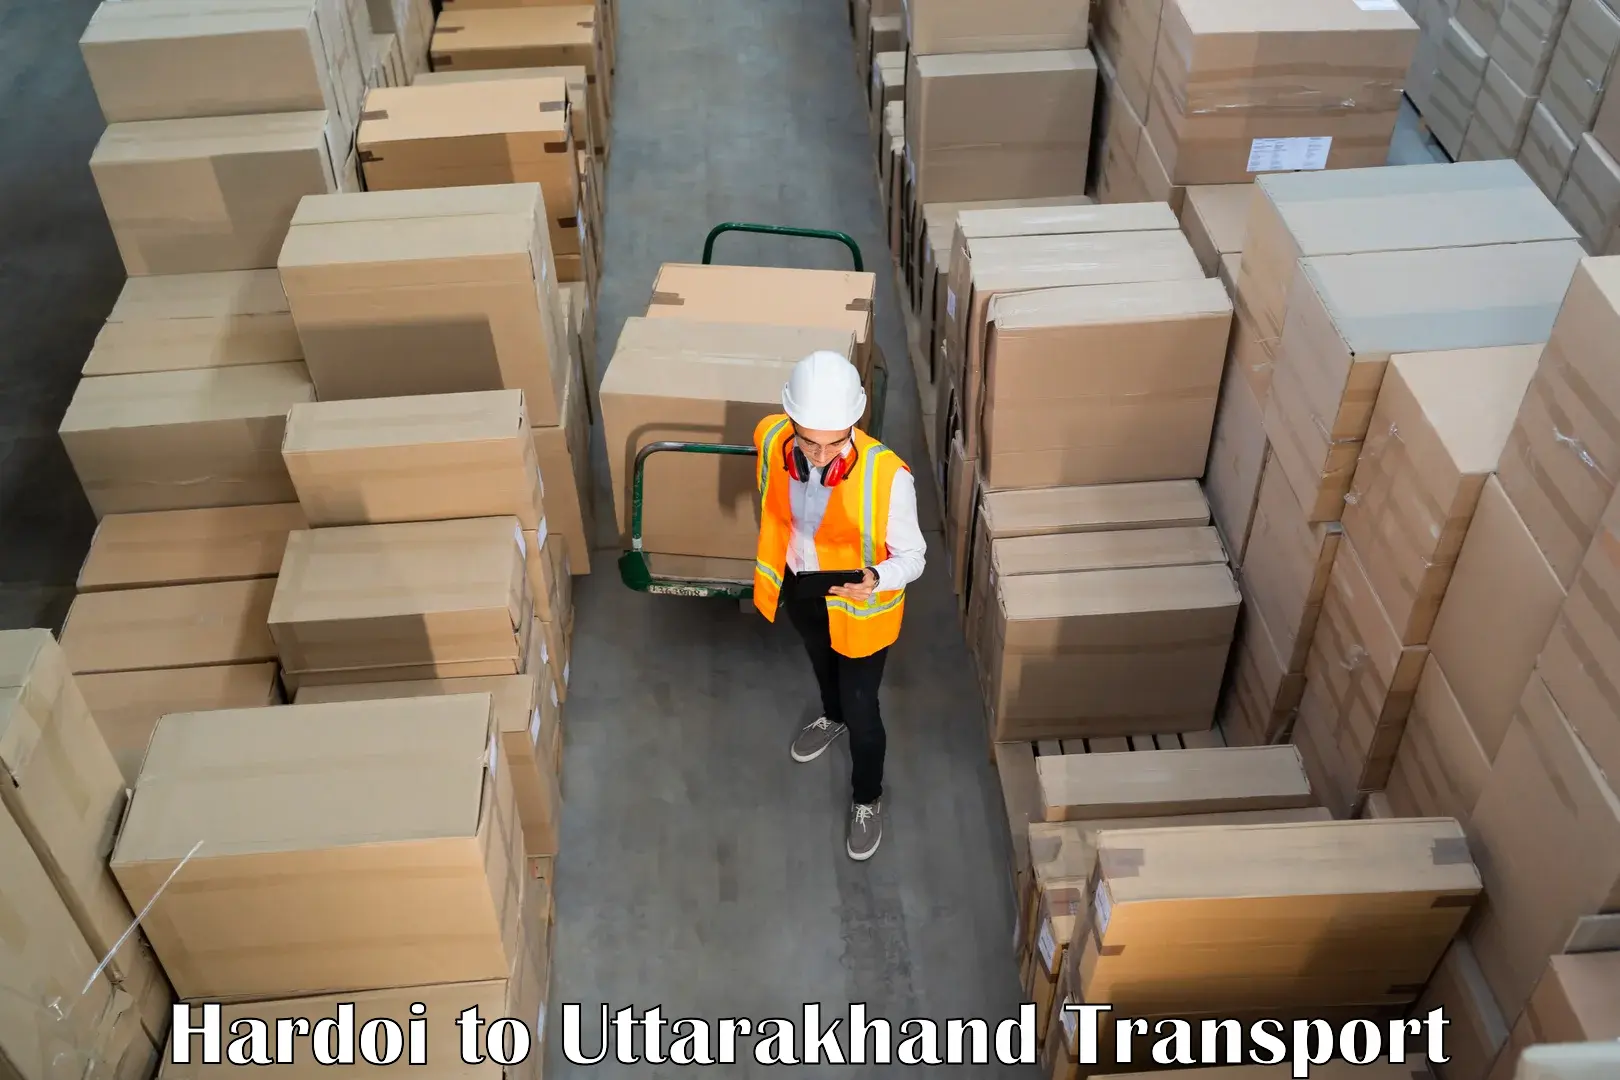 Air freight transport services Hardoi to Haridwar